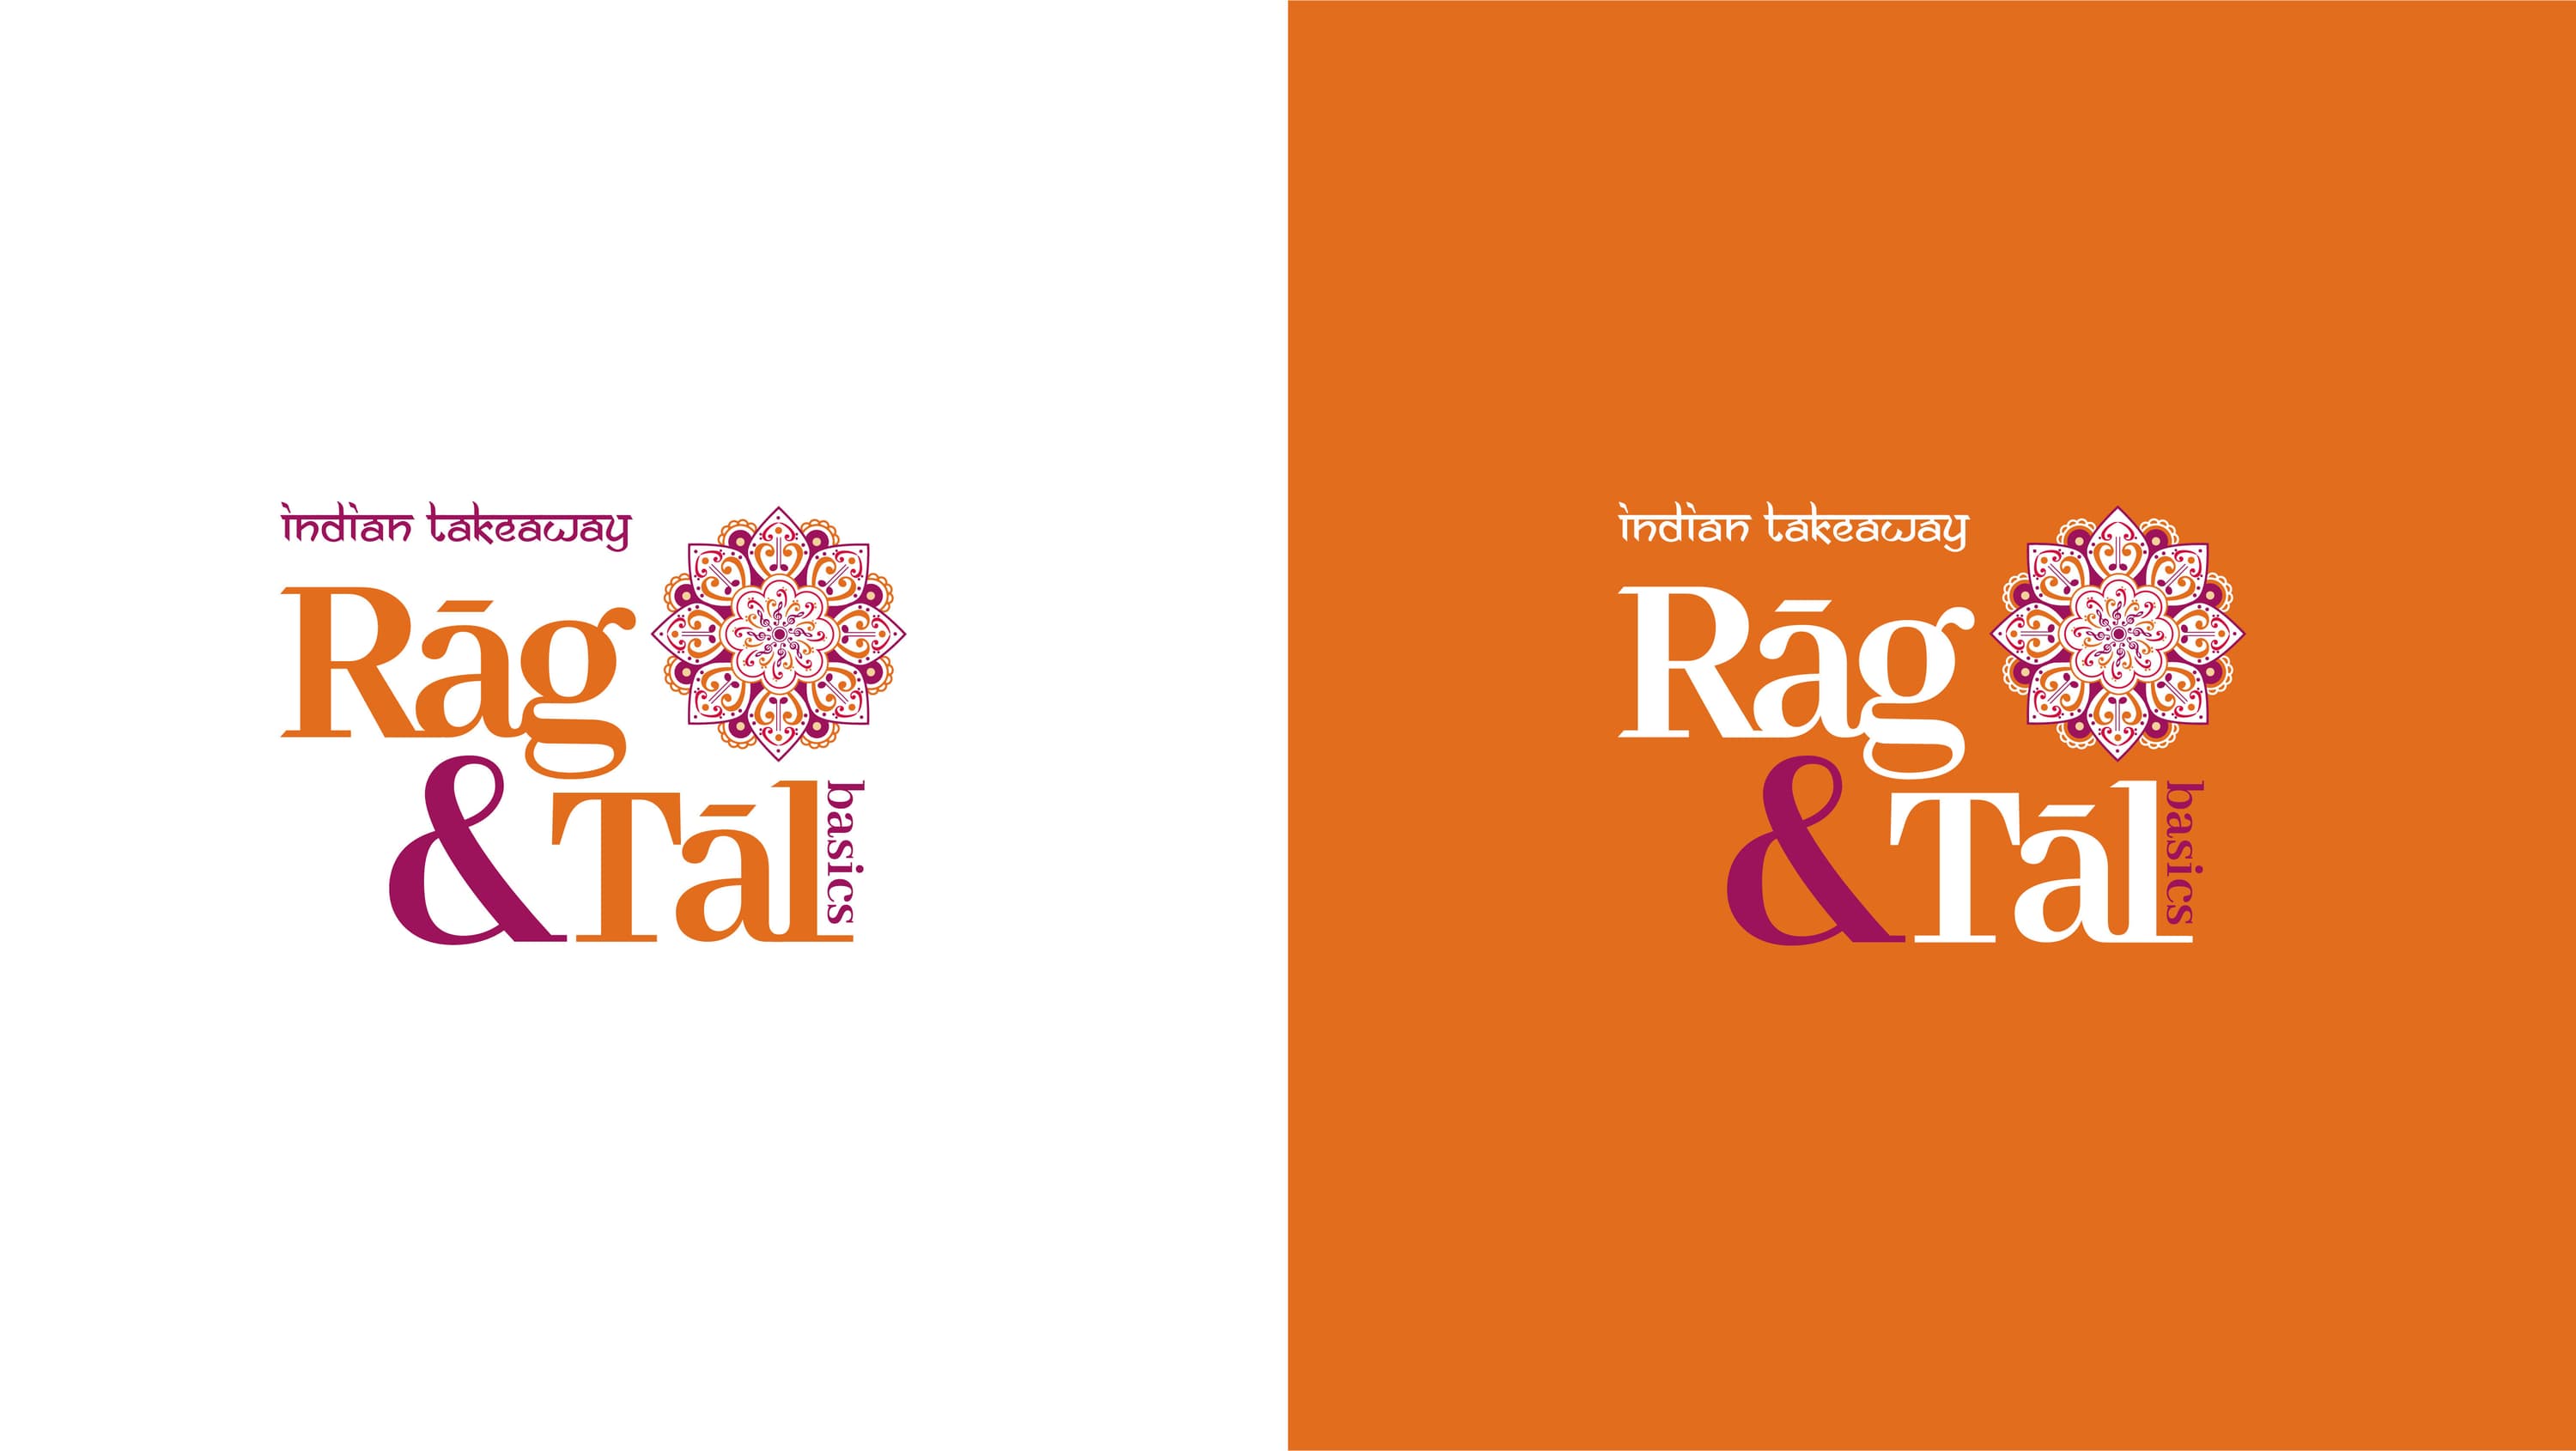 Rag and tal logo